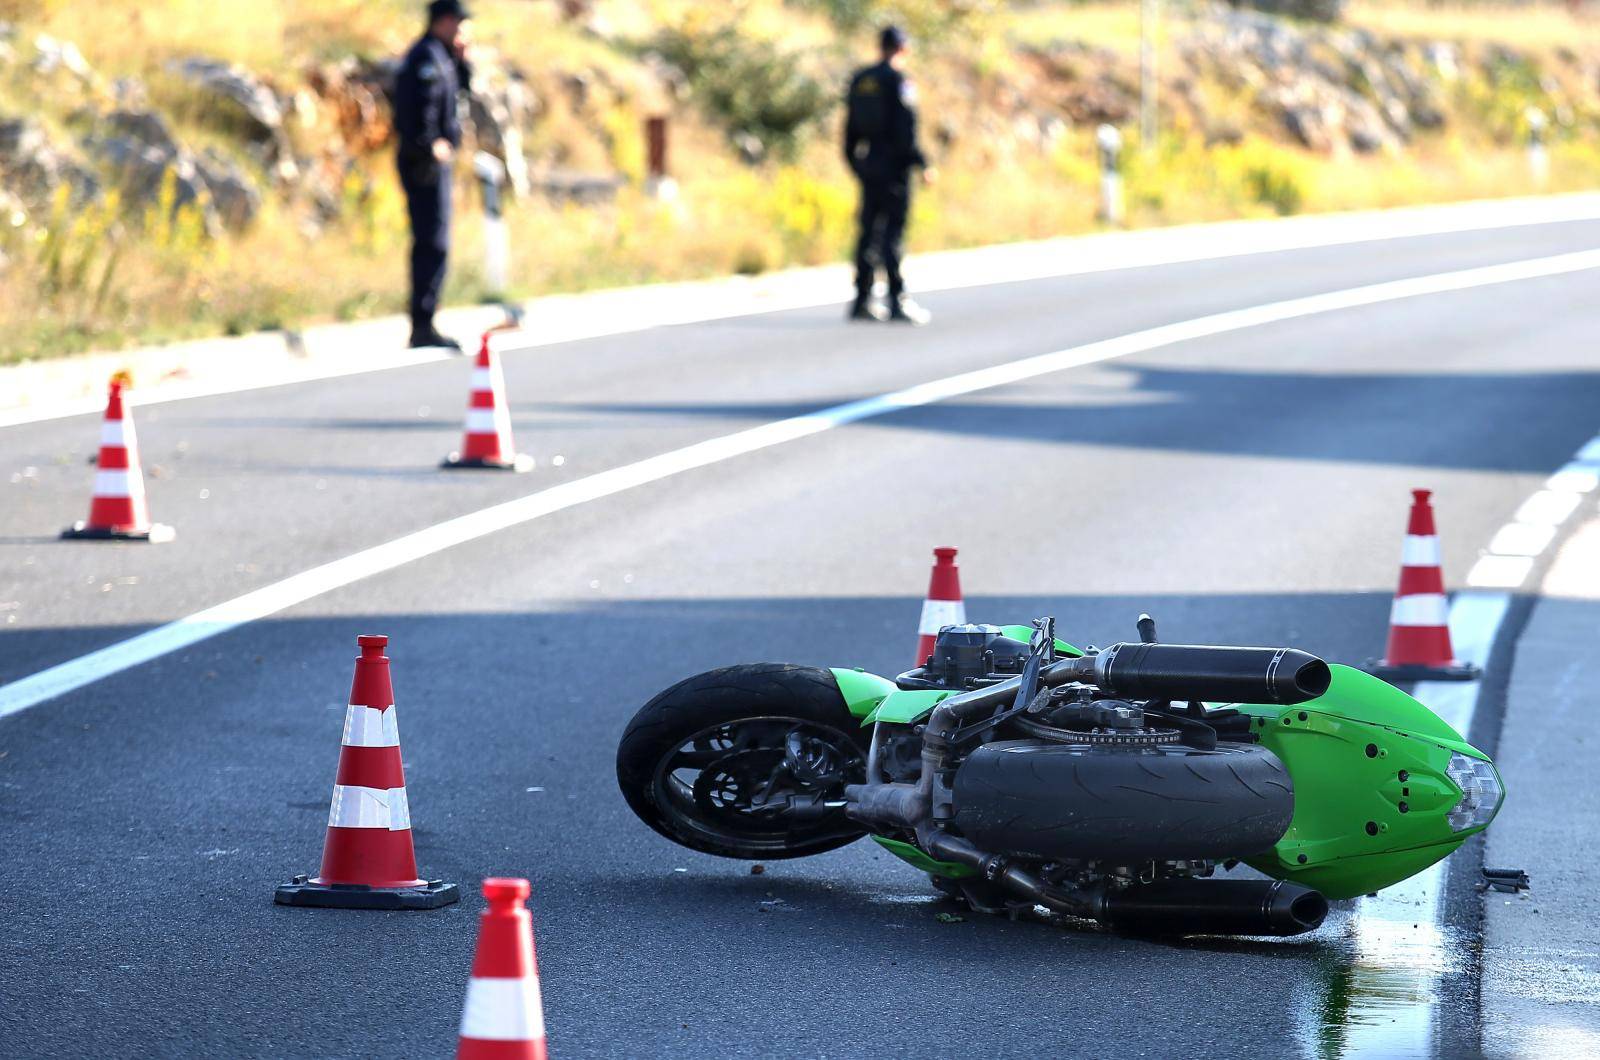 TeÅ¡ka nesreÄa kod Å ibenika, u sudaru automobila i motocikla smrtno stradao motociklist